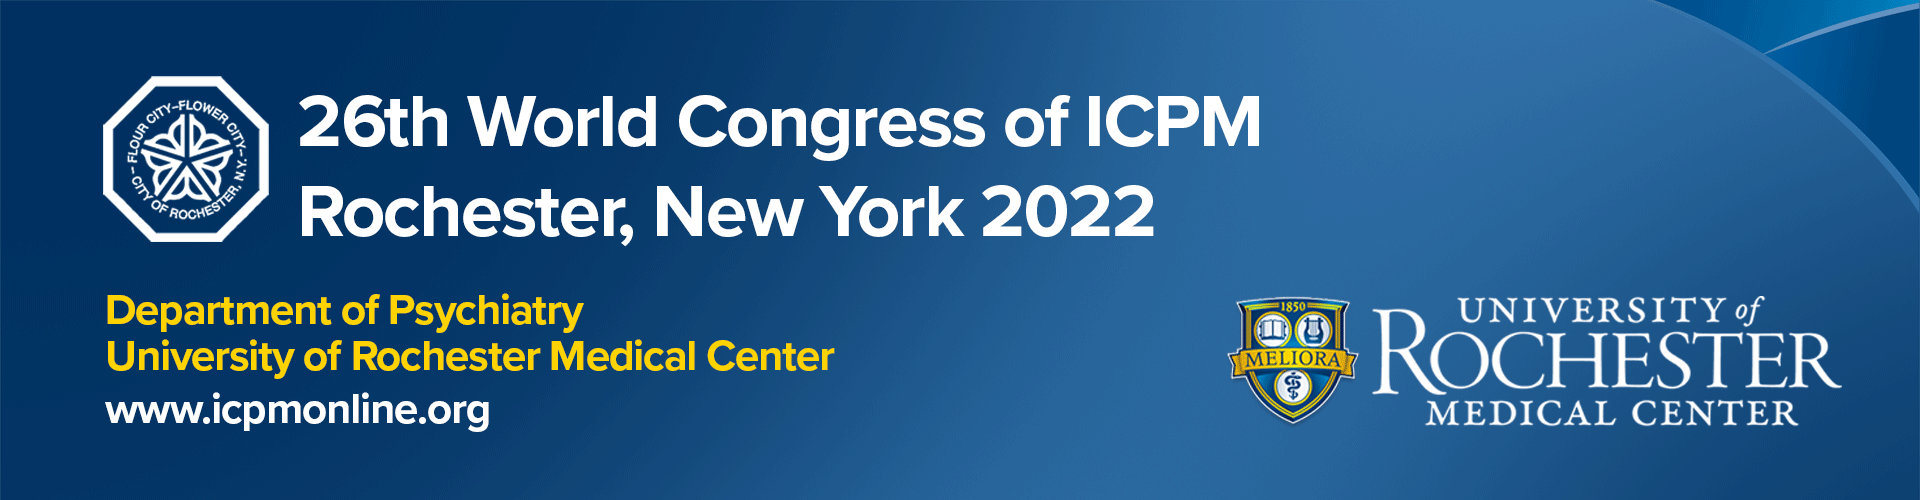 University of Rochester Medical Center 2022 ICPM World Congress